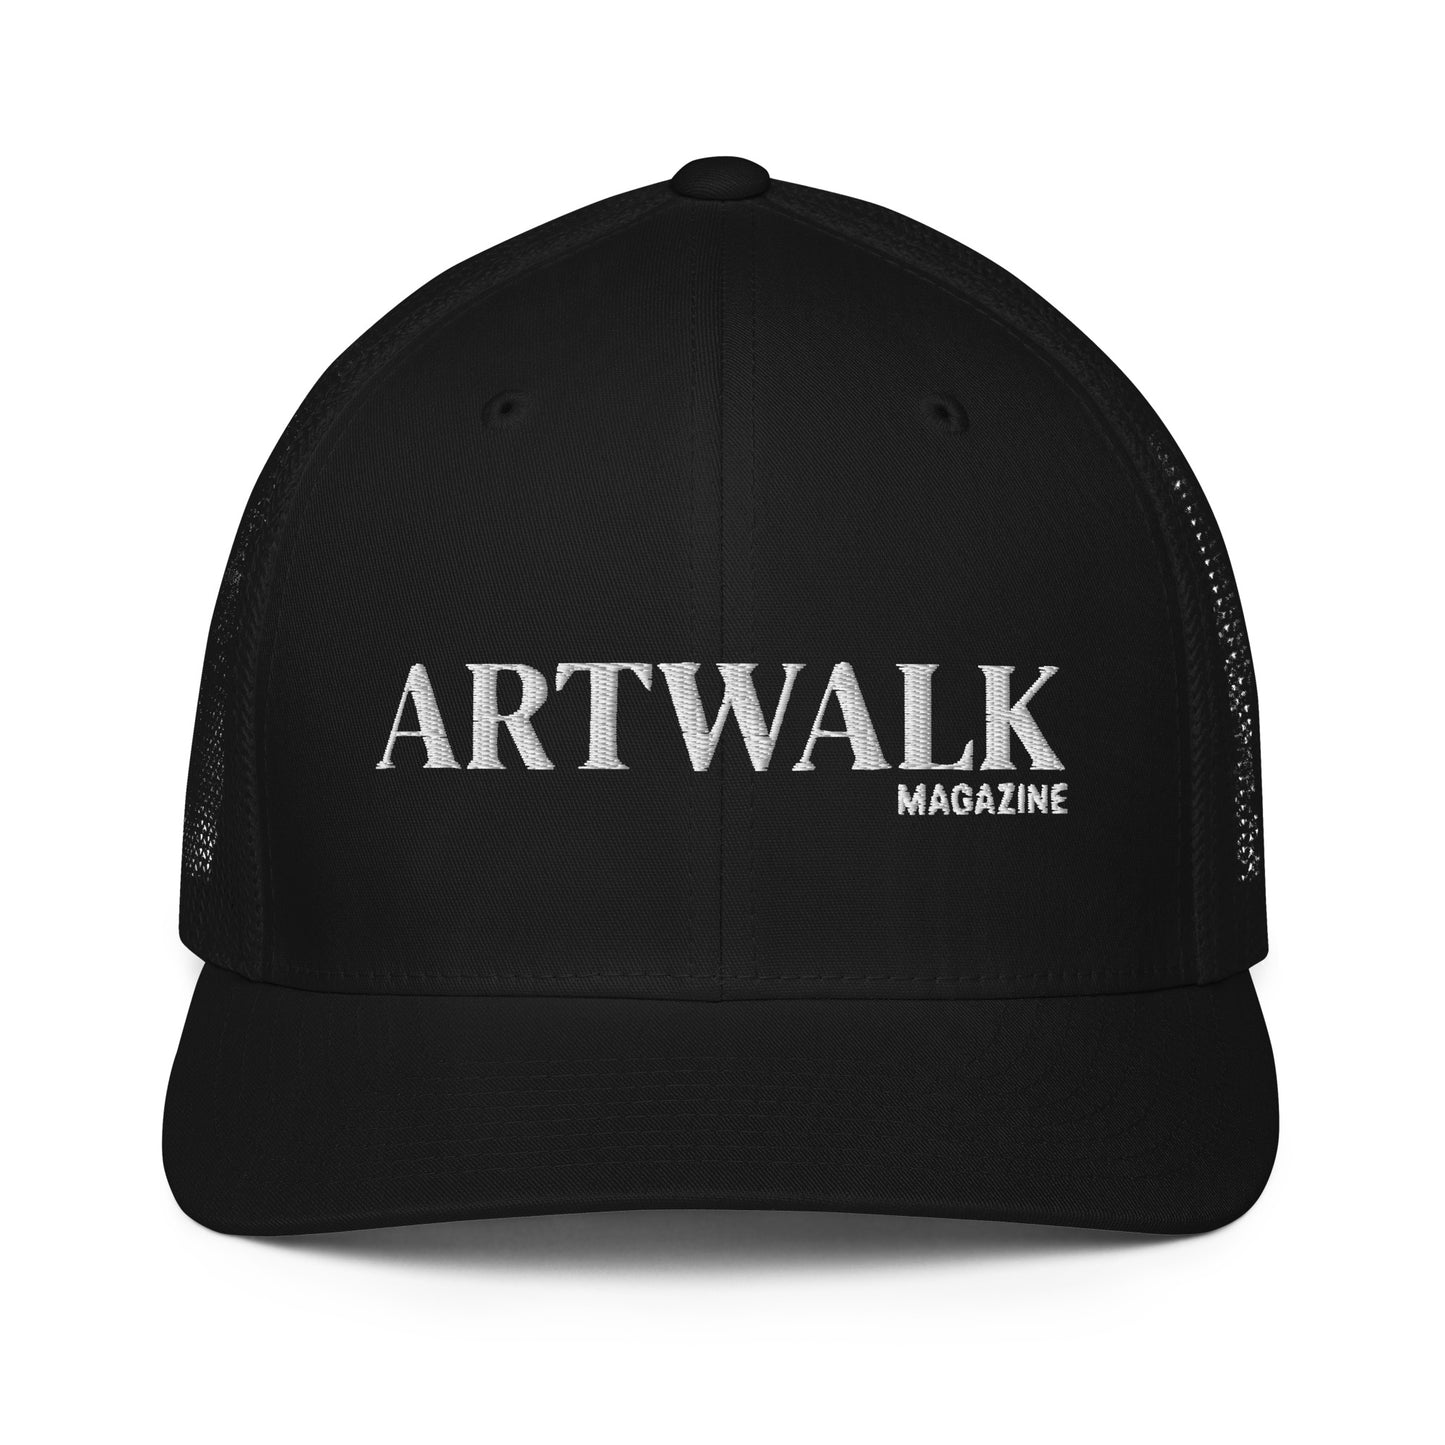 Artwalk Magazine Black/White trucker cap